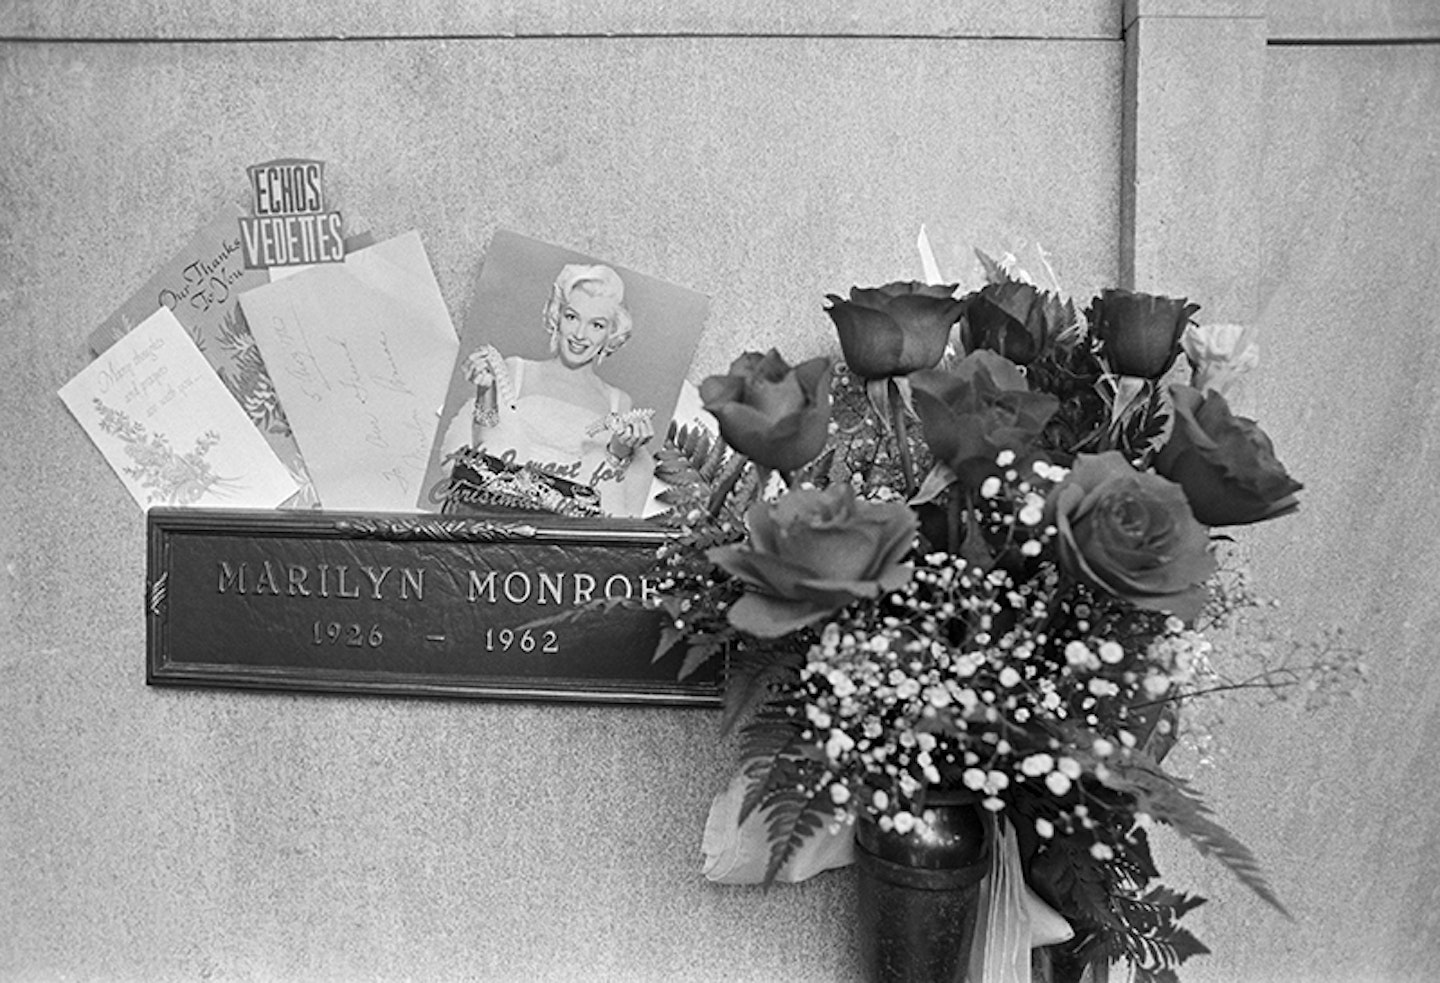 Marilyn Monroe's Crypt